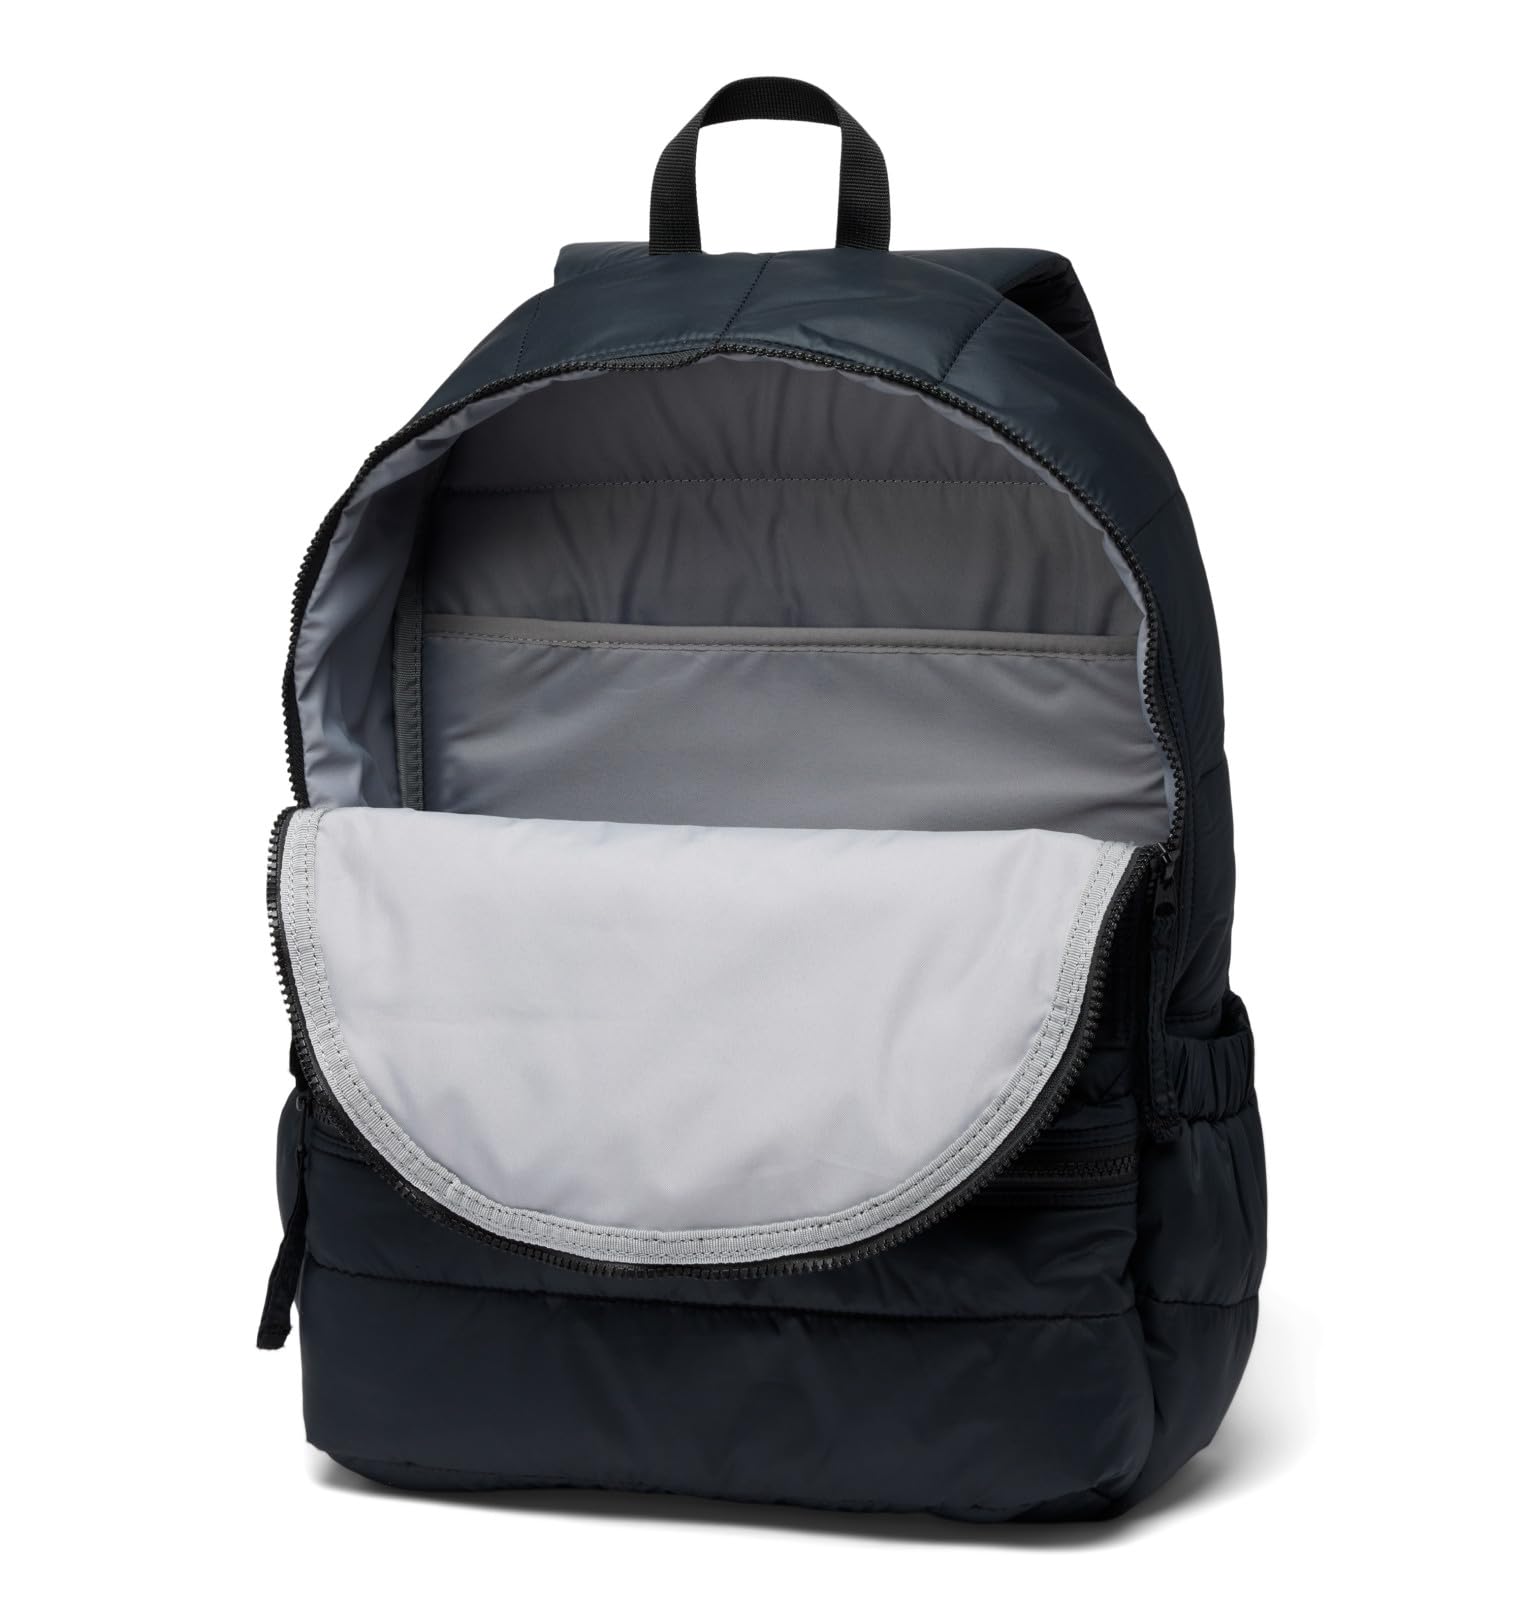 Columbia Unisex Pike Lake 20L Backpack, Black, One Size